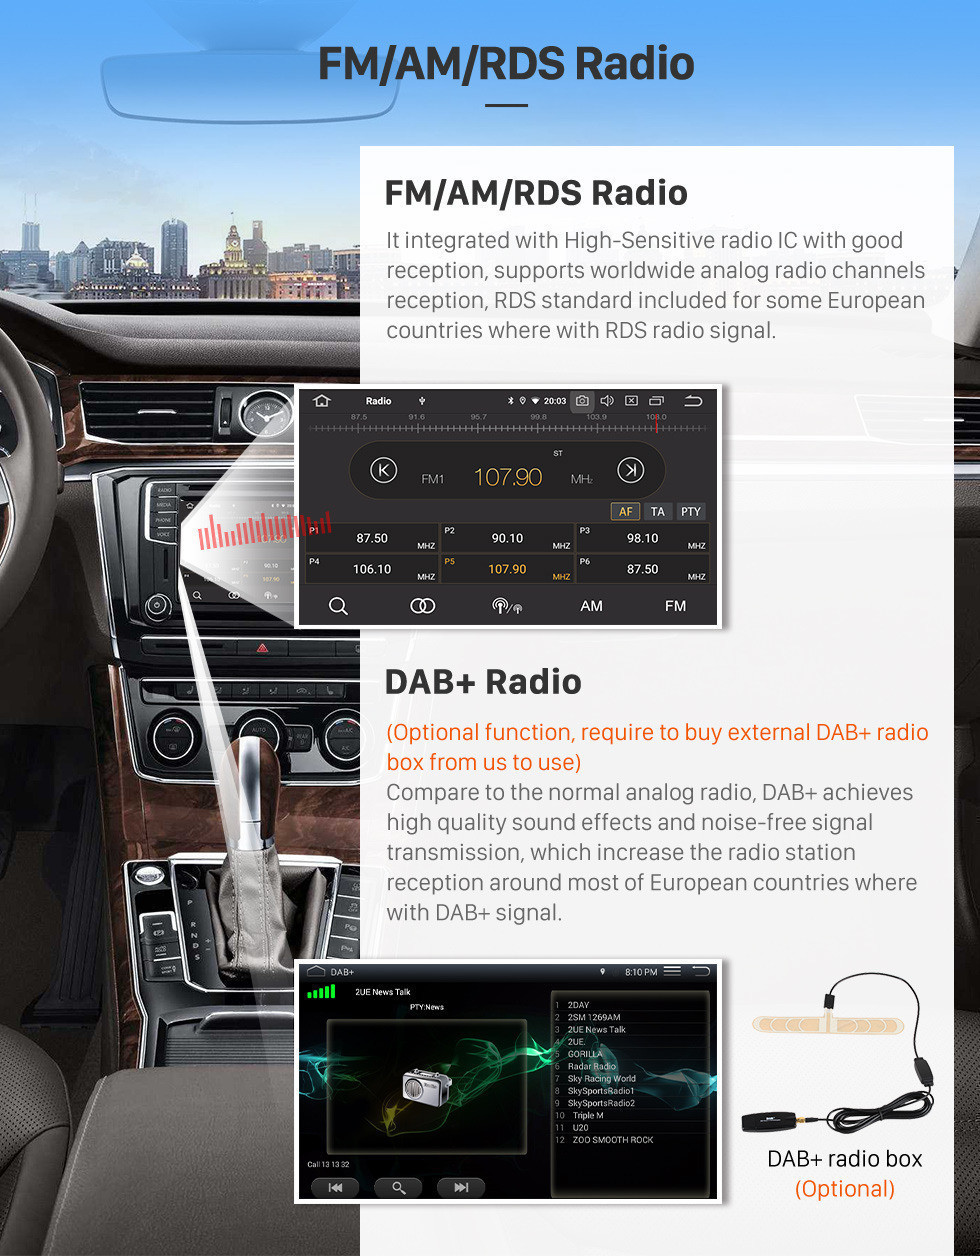 Seicane 9 pulgadas Android 11.0 2013 2014 2015 Hyundai Santa Fe IX45 Sistema de navegación GPS HD Pantalla táctil 3G WiFi Cámara trasera AUX Control del volante USB Bluetooth 1080P OBDII TPMS DVR